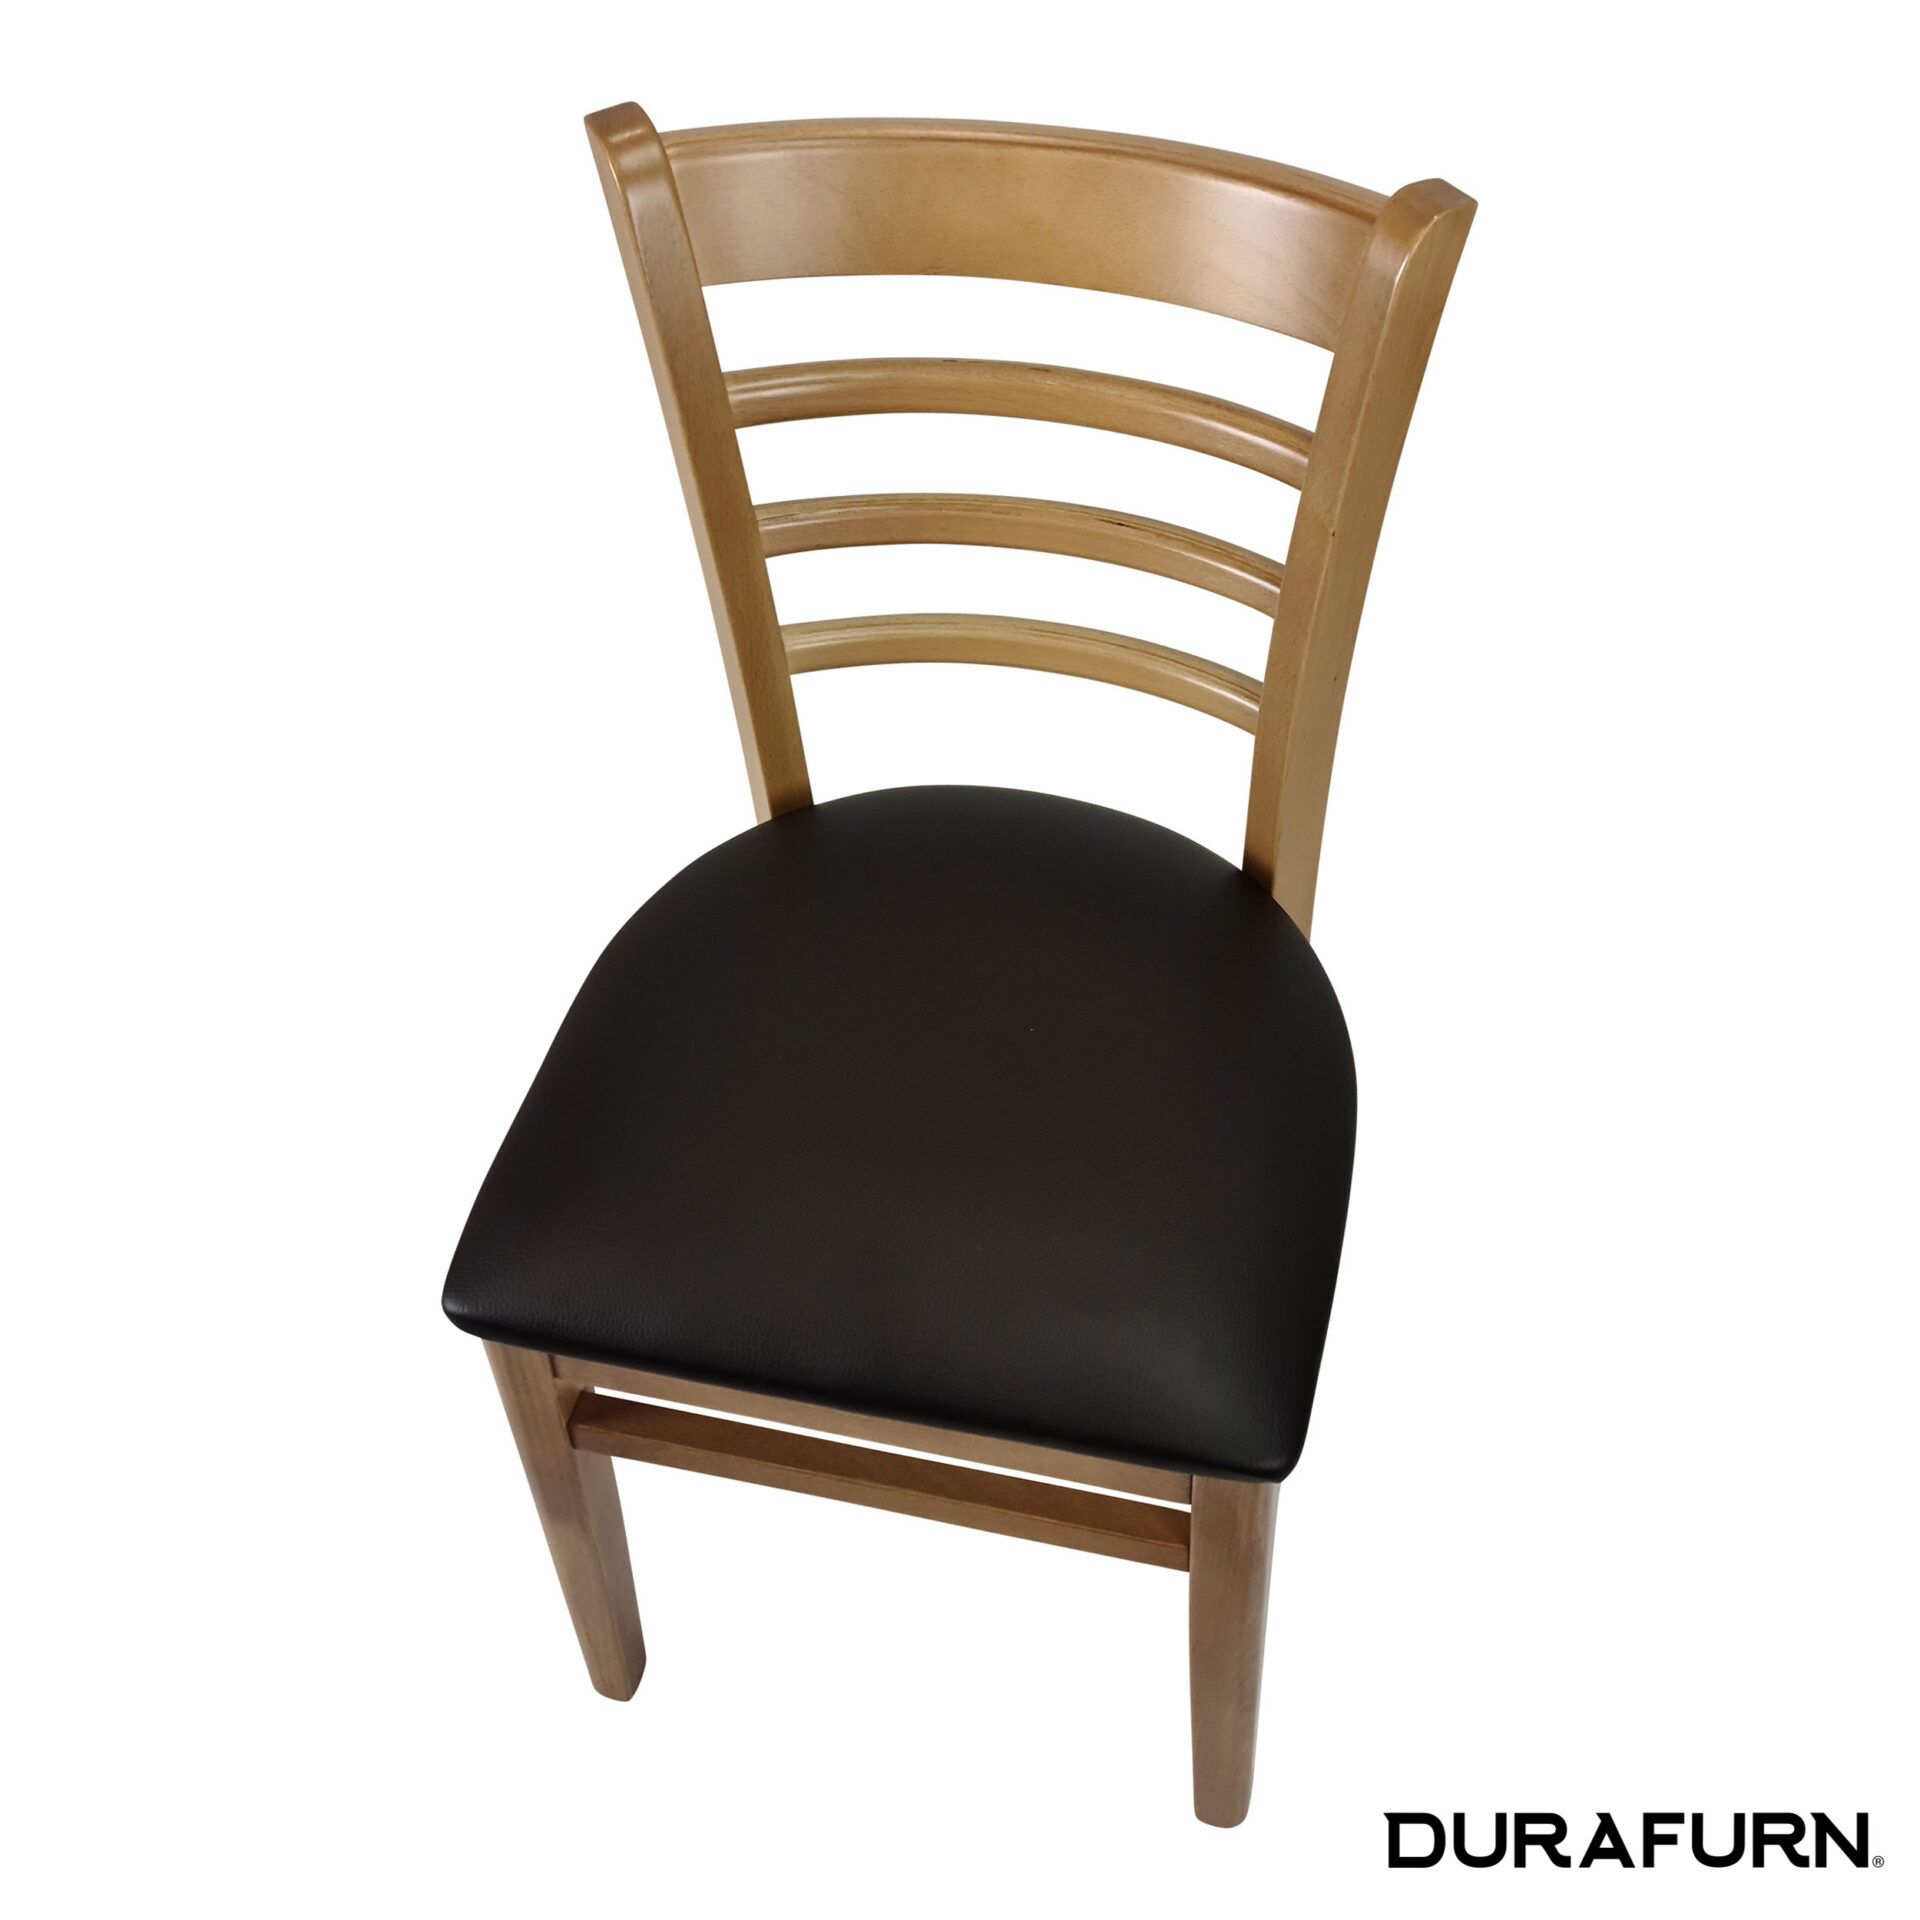 florence chair natural chocolate cushion top angle